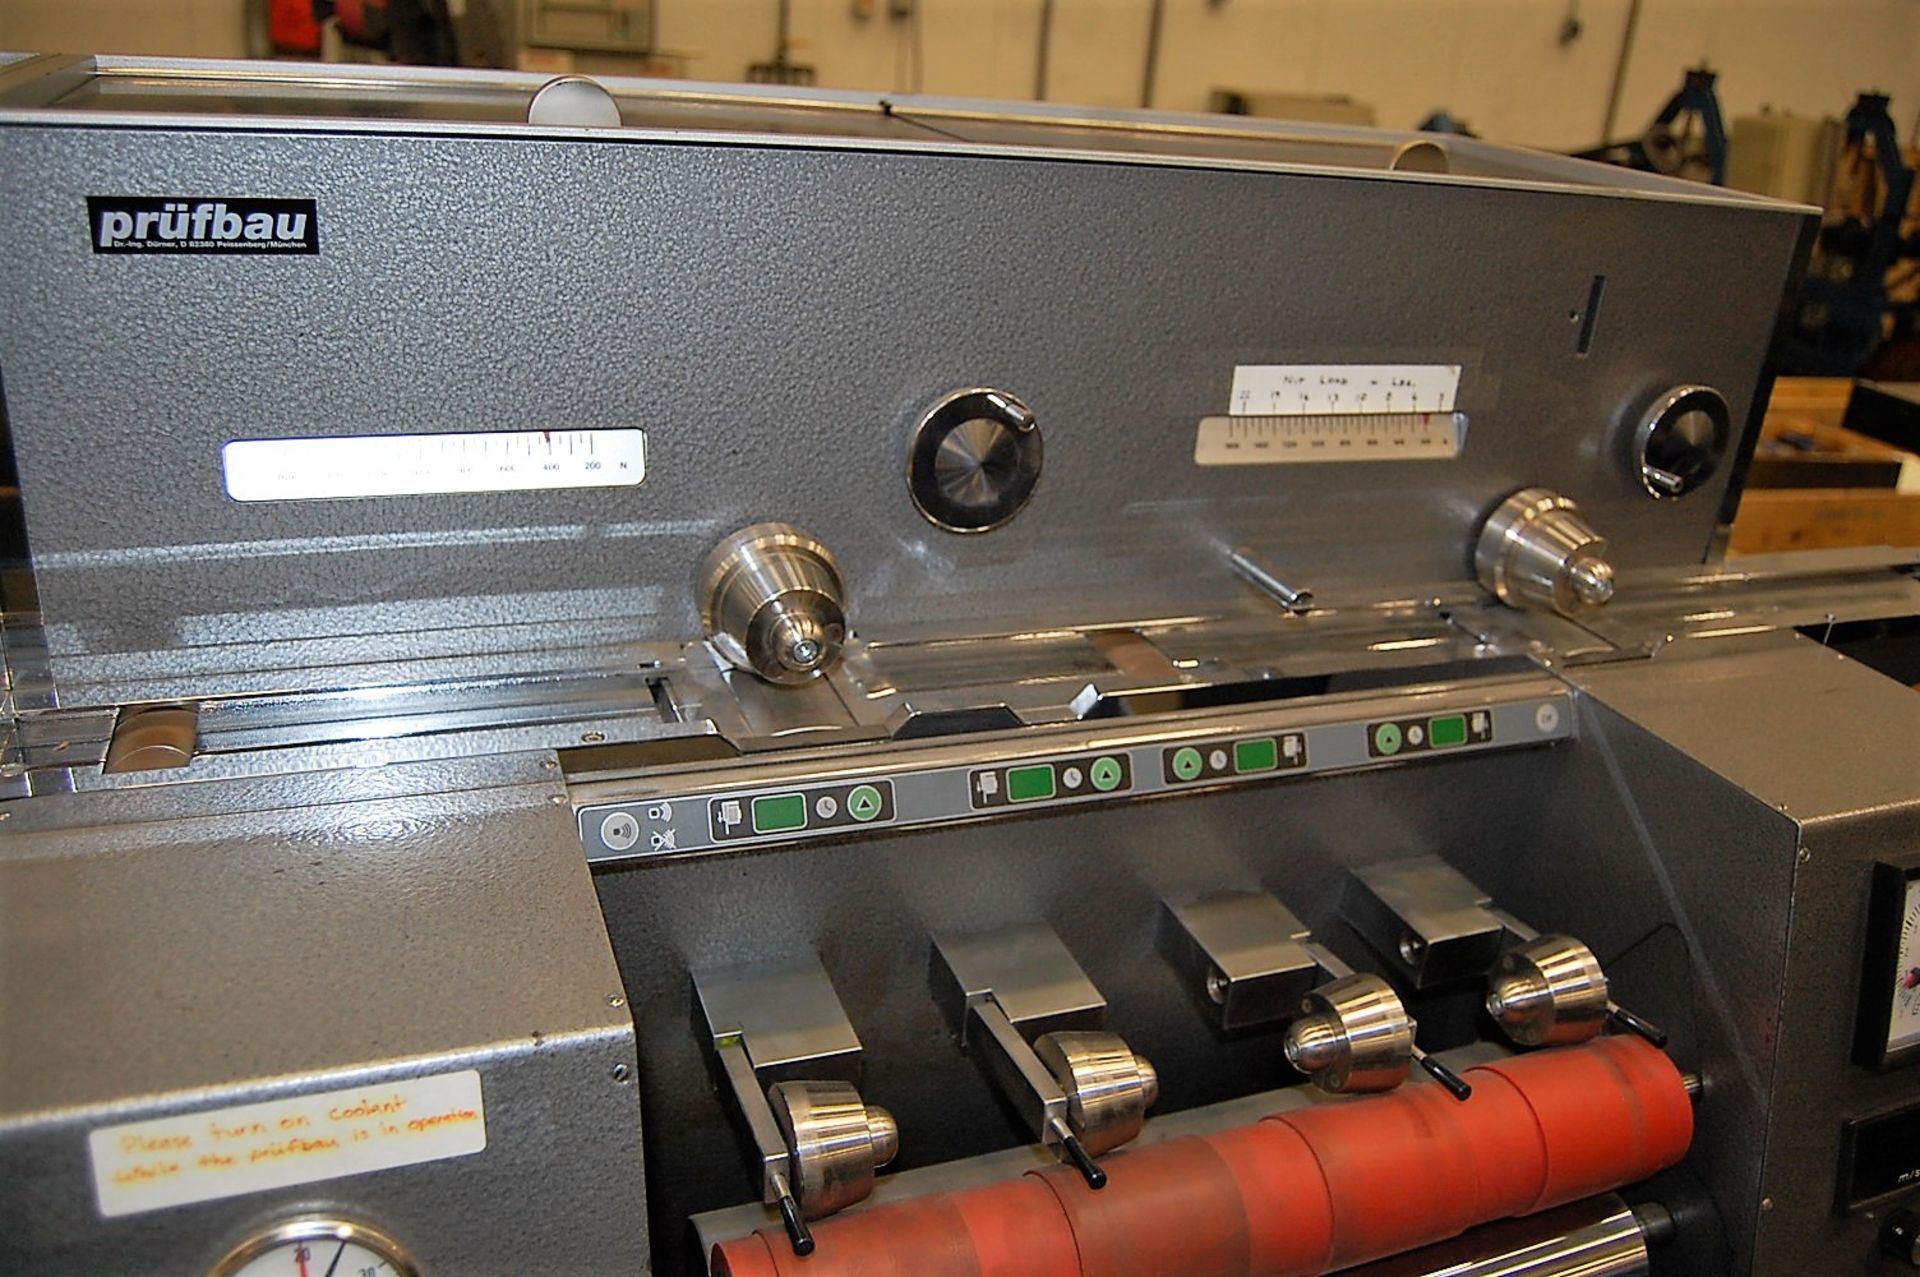 Model Prufbau Type MZ2 FWHTAT Multipurpose Printability Tester - Image 12 of 17